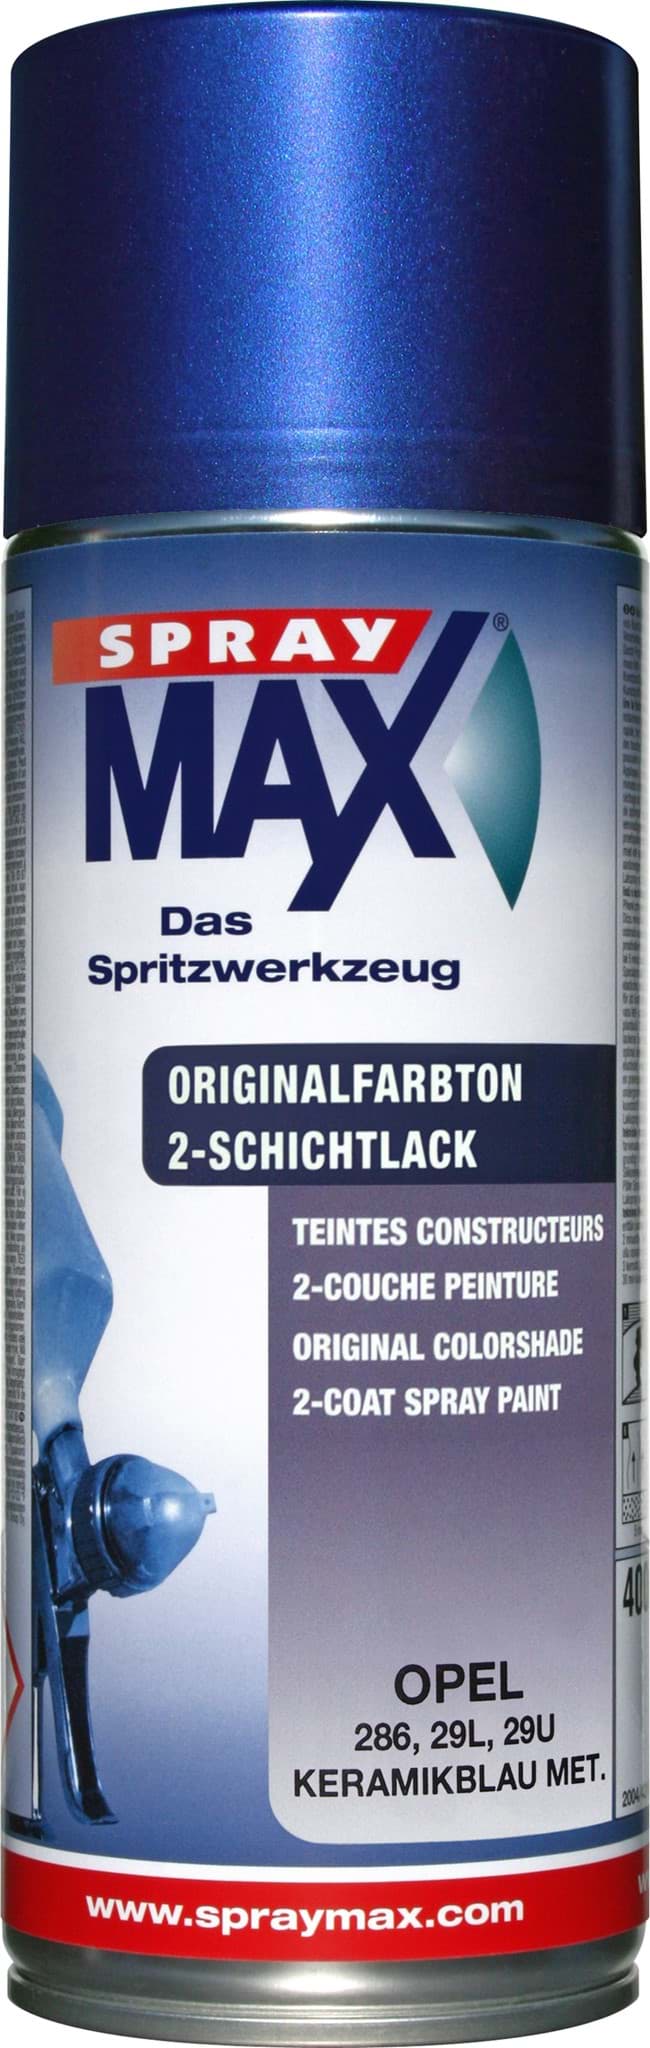 Obraz SprayMax Originalfarbton für Opel 286 keramikblau met.